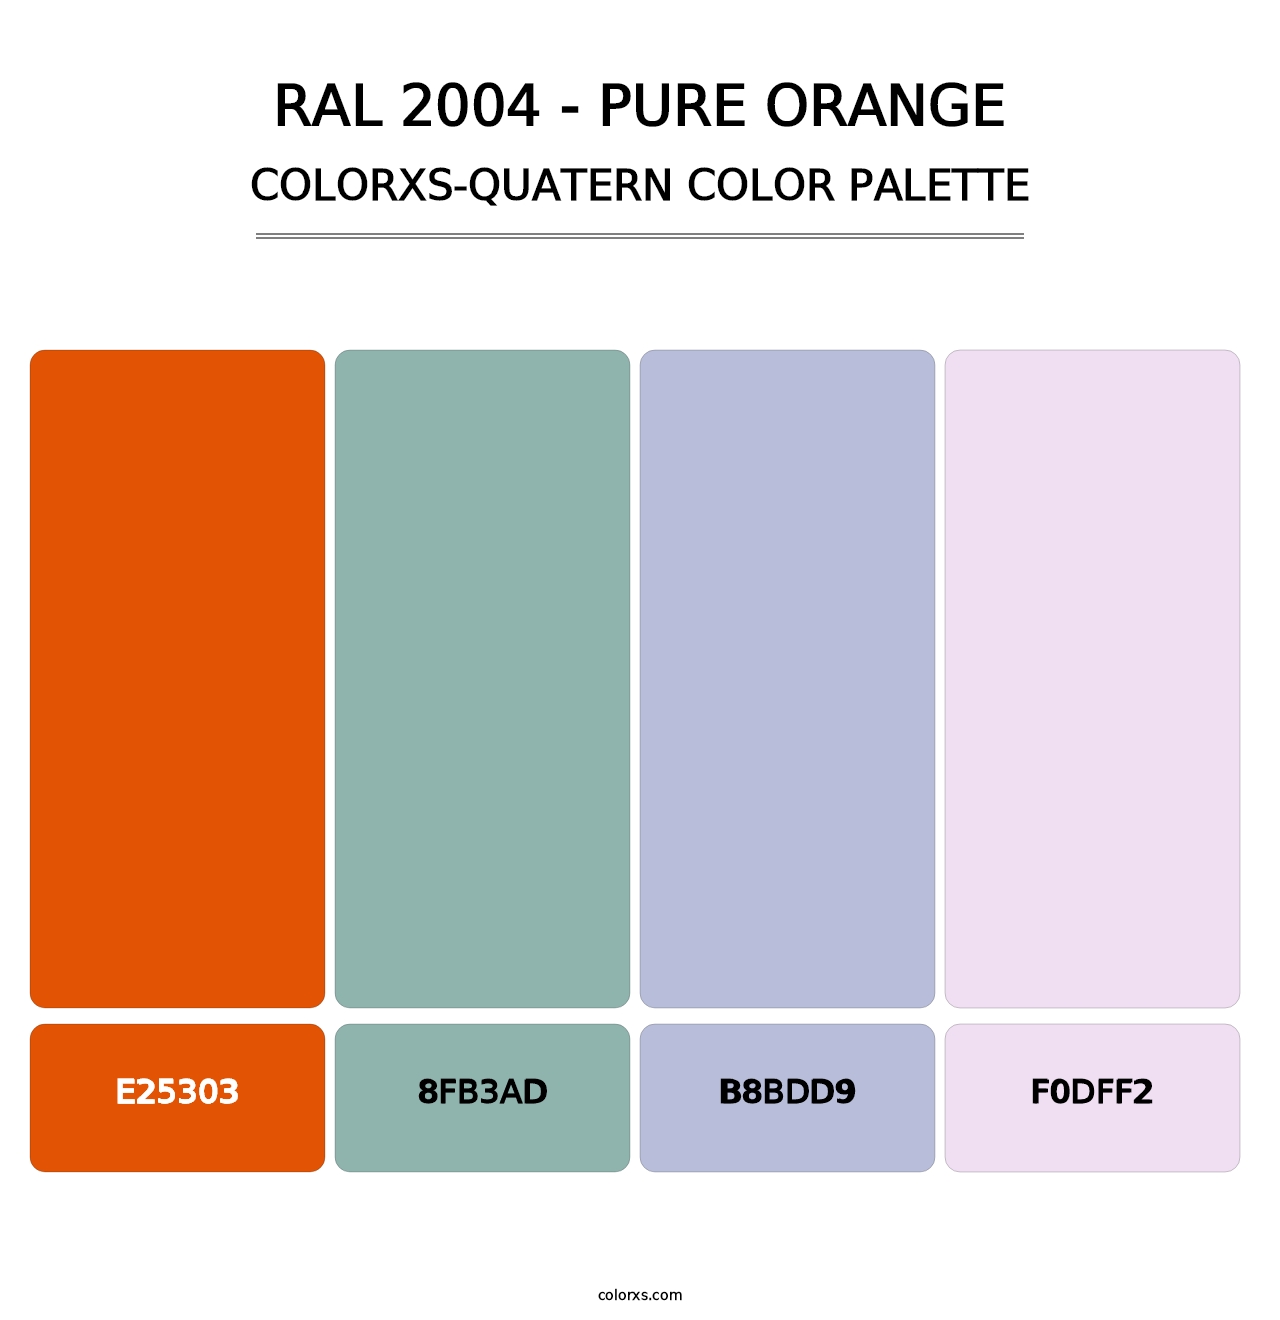 RAL 2004 - Pure Orange - Colorxs Quatern Palette